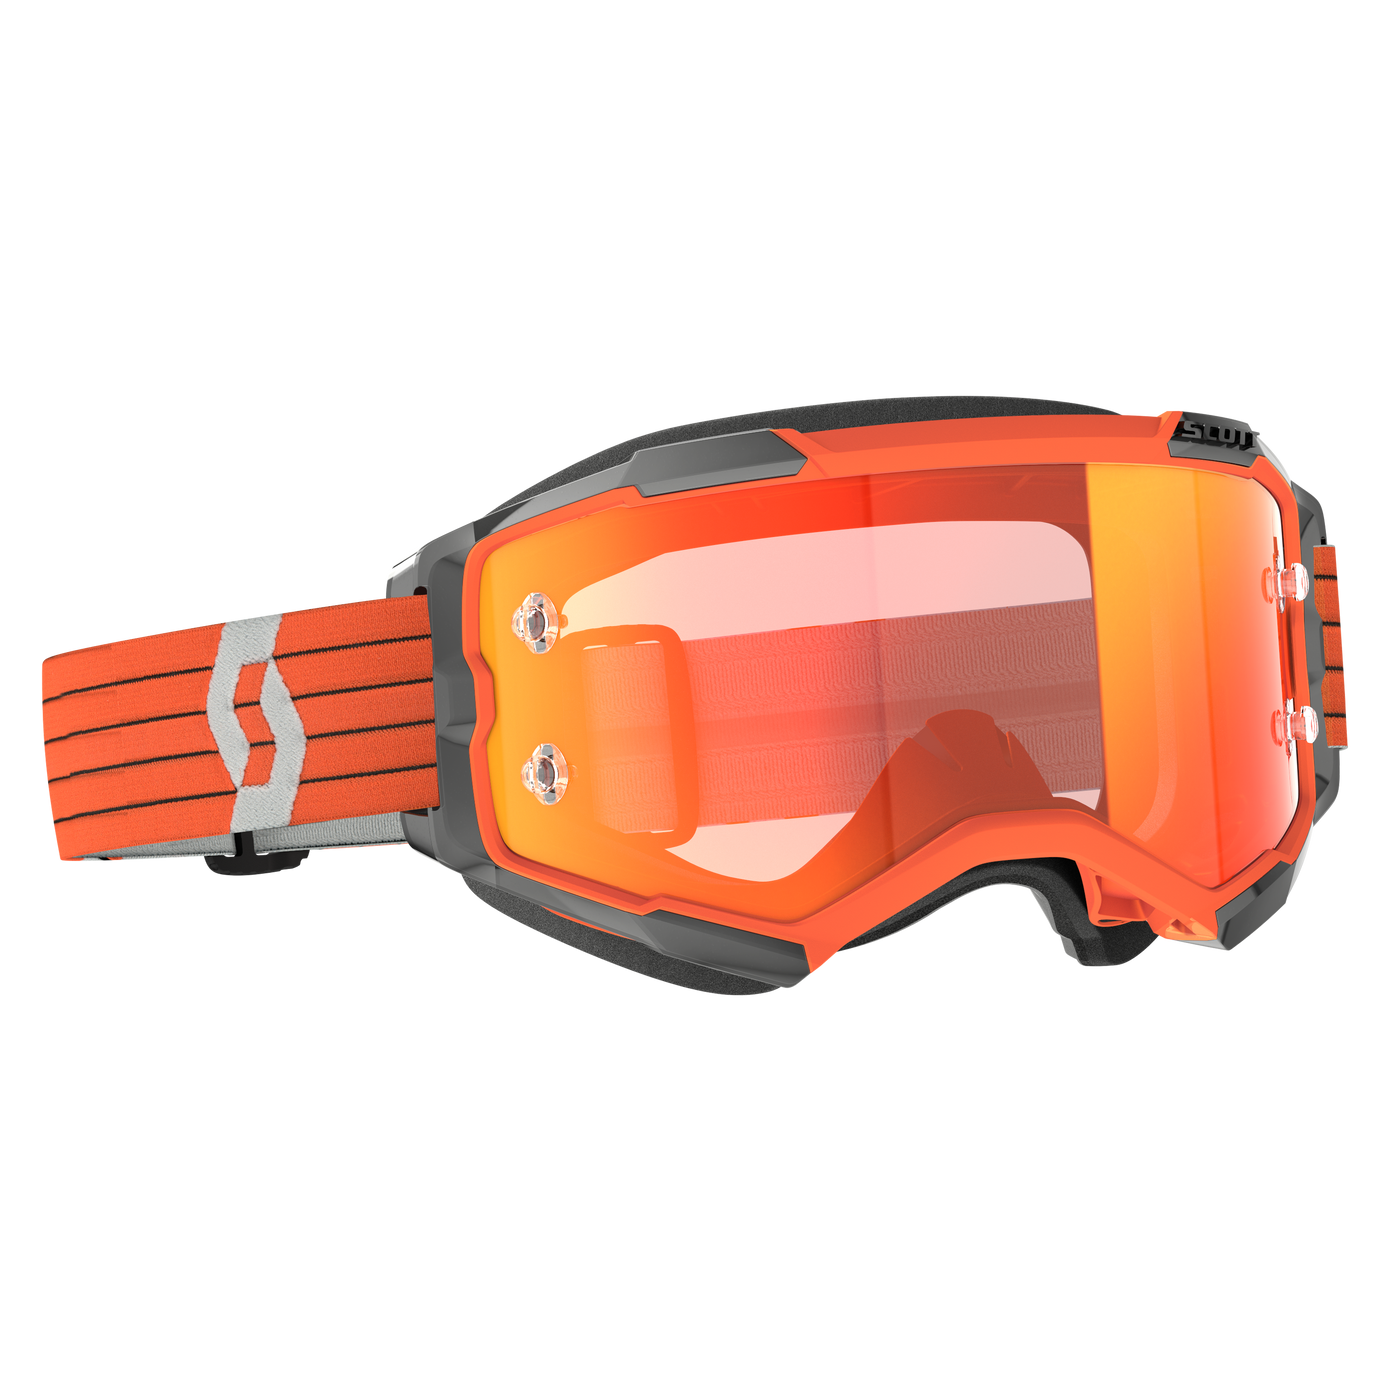 Scott Fury Goggle, Orange / Grey - Orange Chrome Works Lens